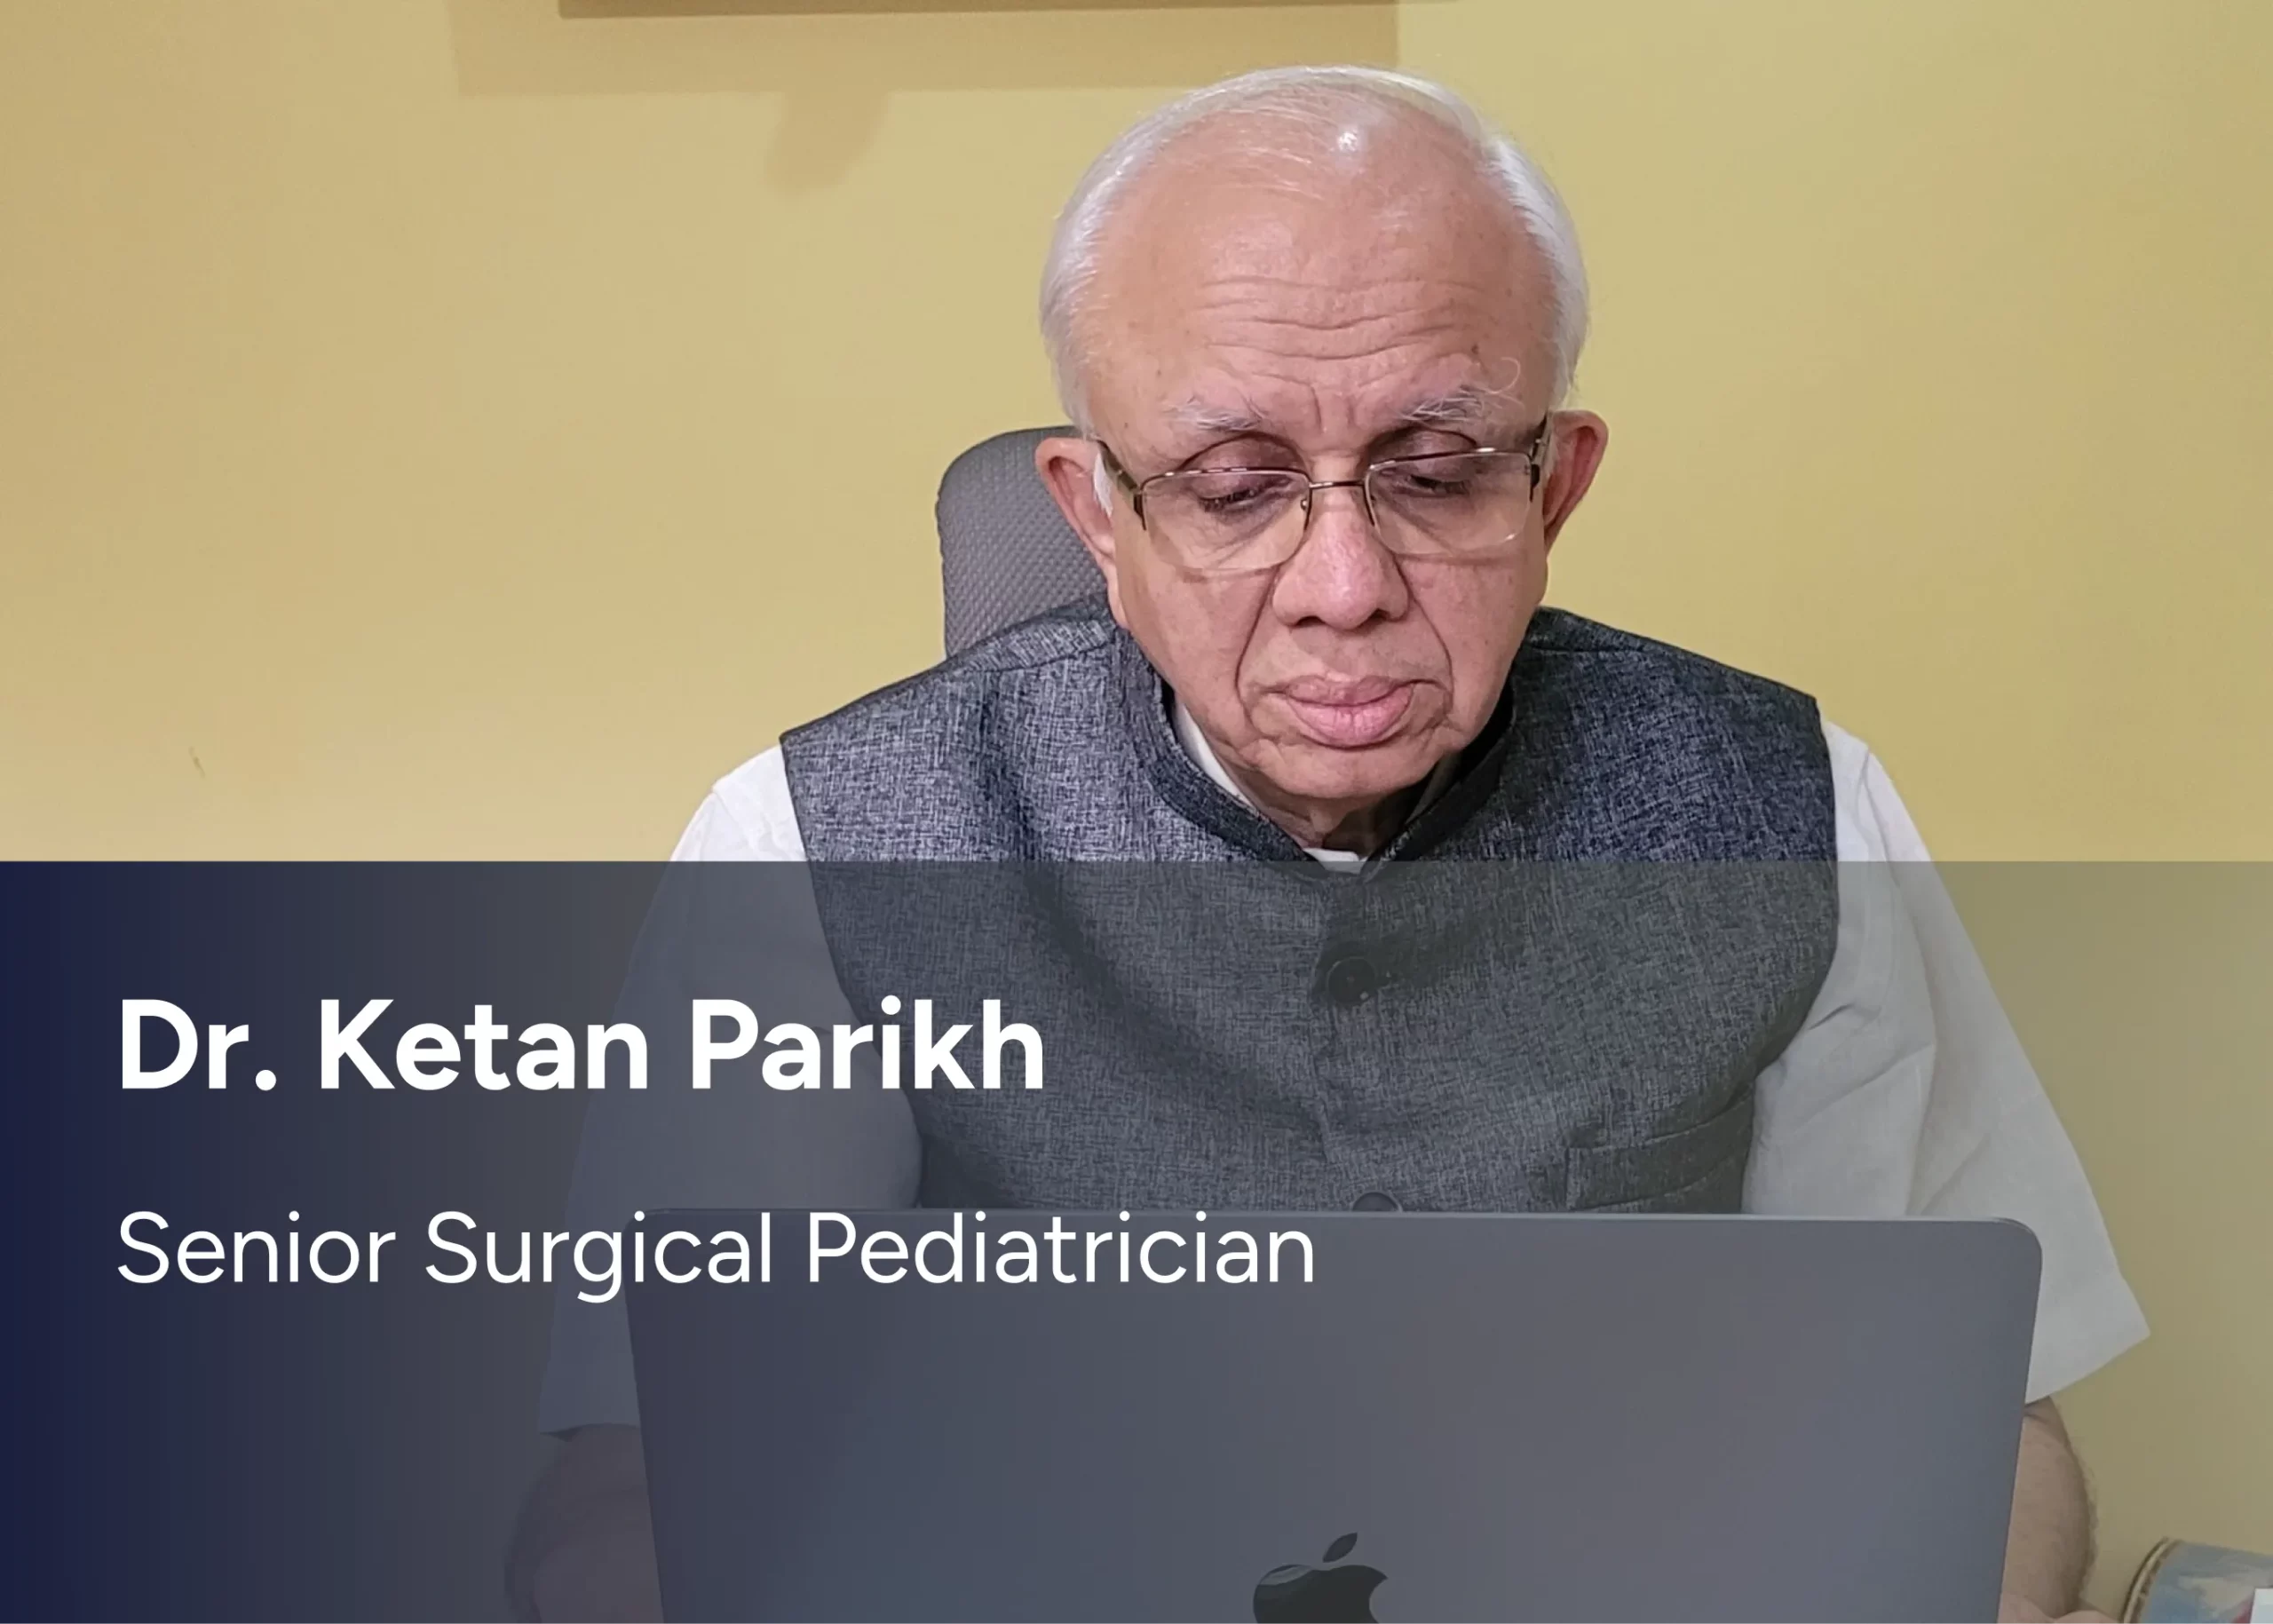 Dr. Ketan Parikh: Revolutionizing Rural Healthcare with Rational, Optimised, Accessible Facilities